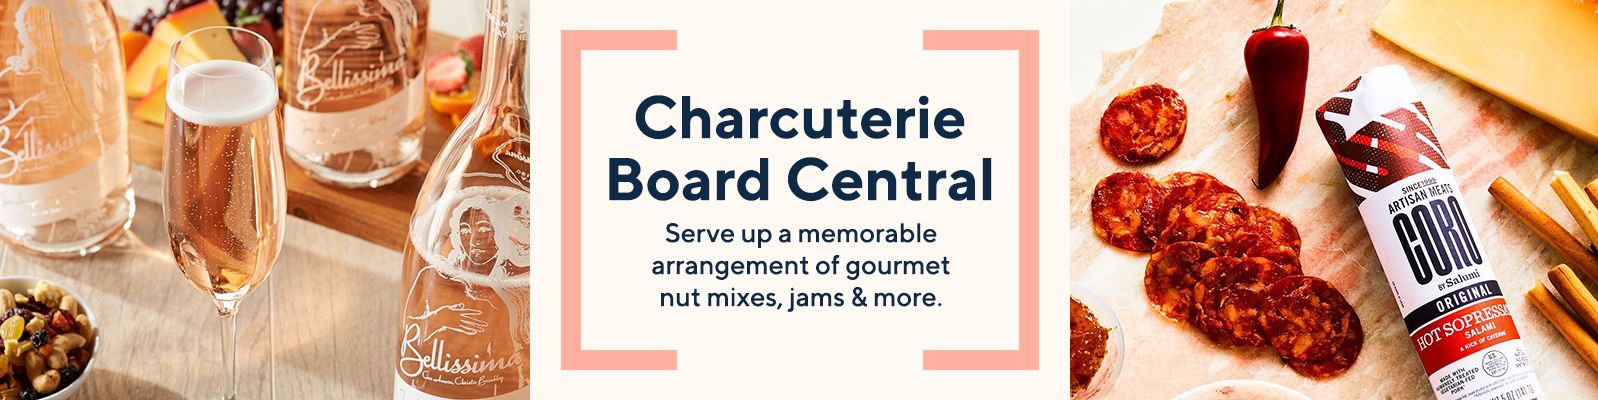 Charcuterie Board Central.  Serve up a memorable arrangement of gourmet nut mixes, jams & more.